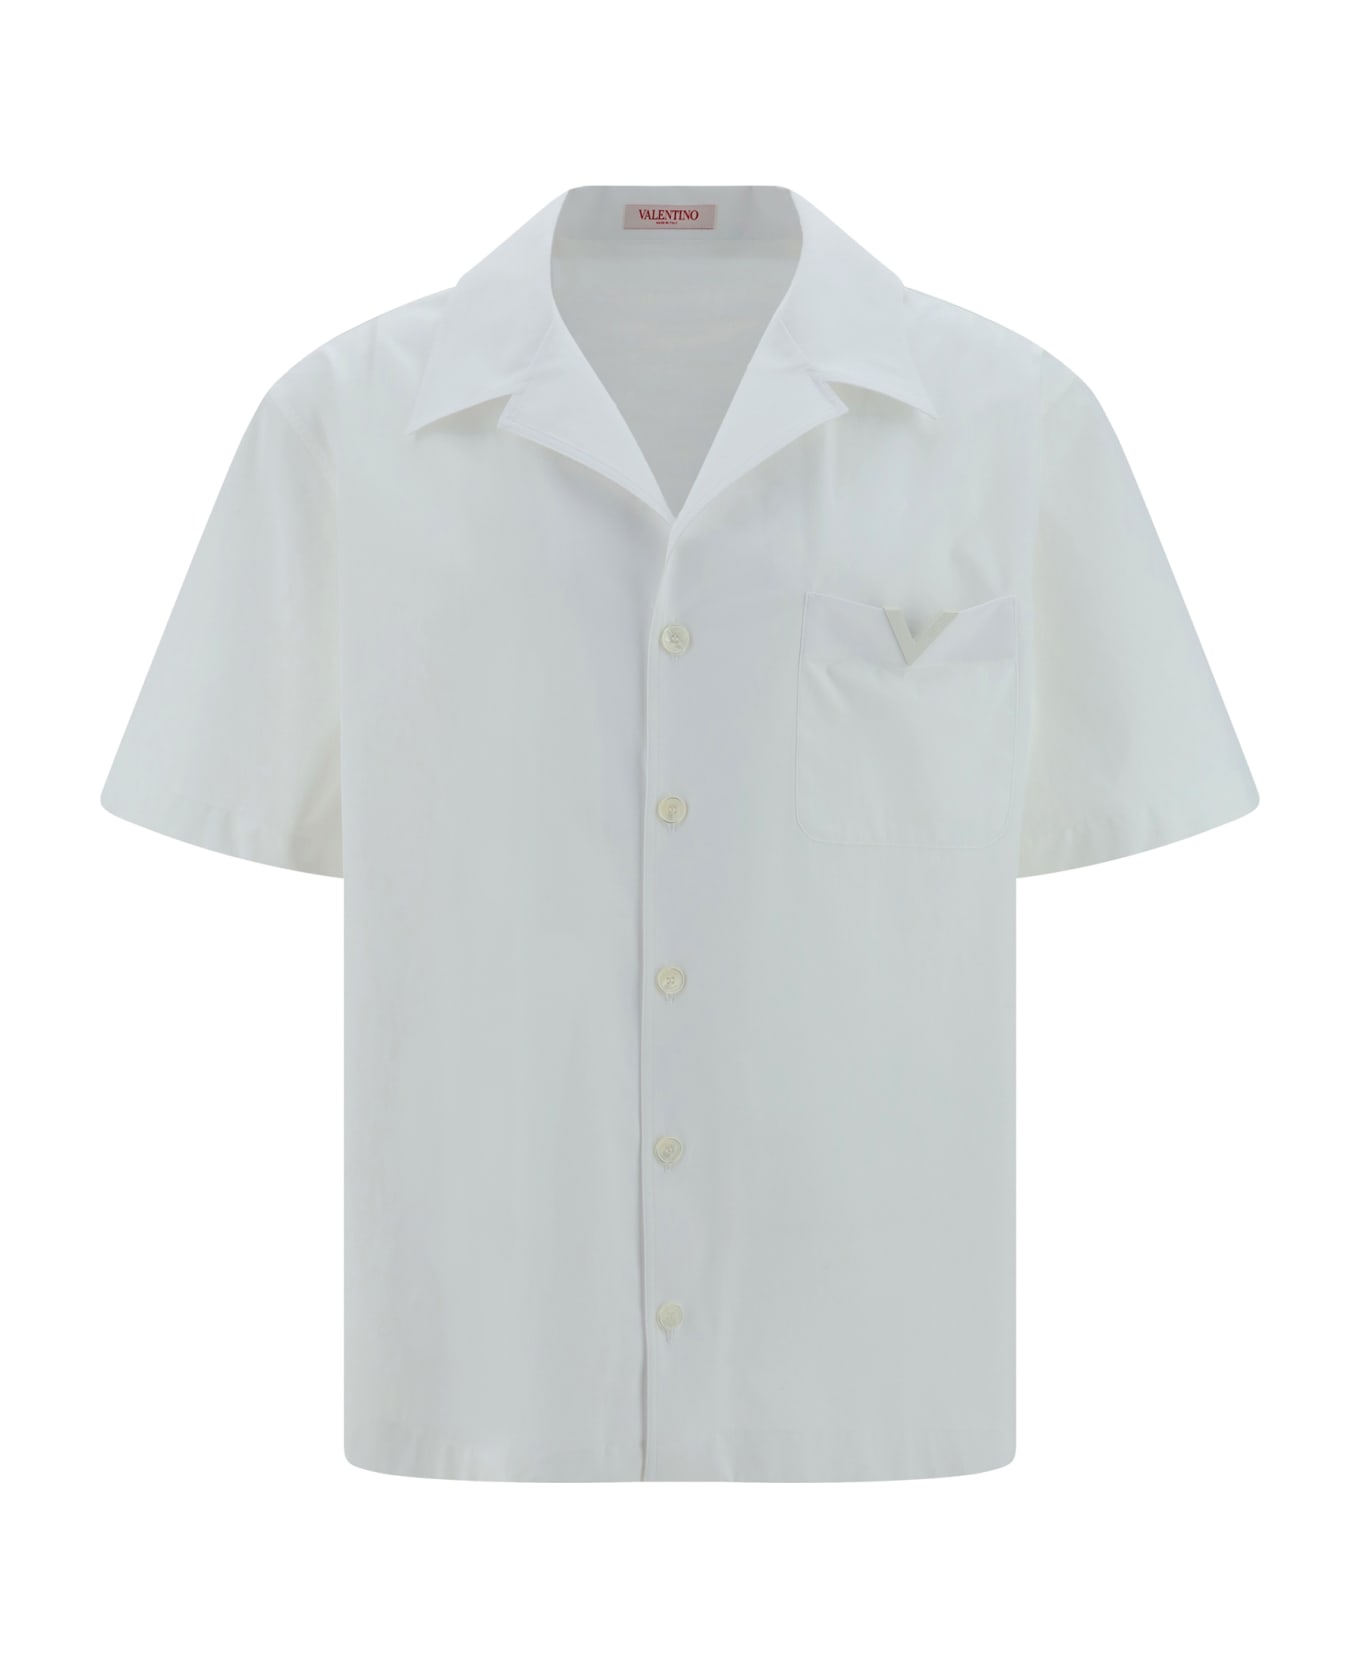 Valentino Garavani Shirt - Bianco